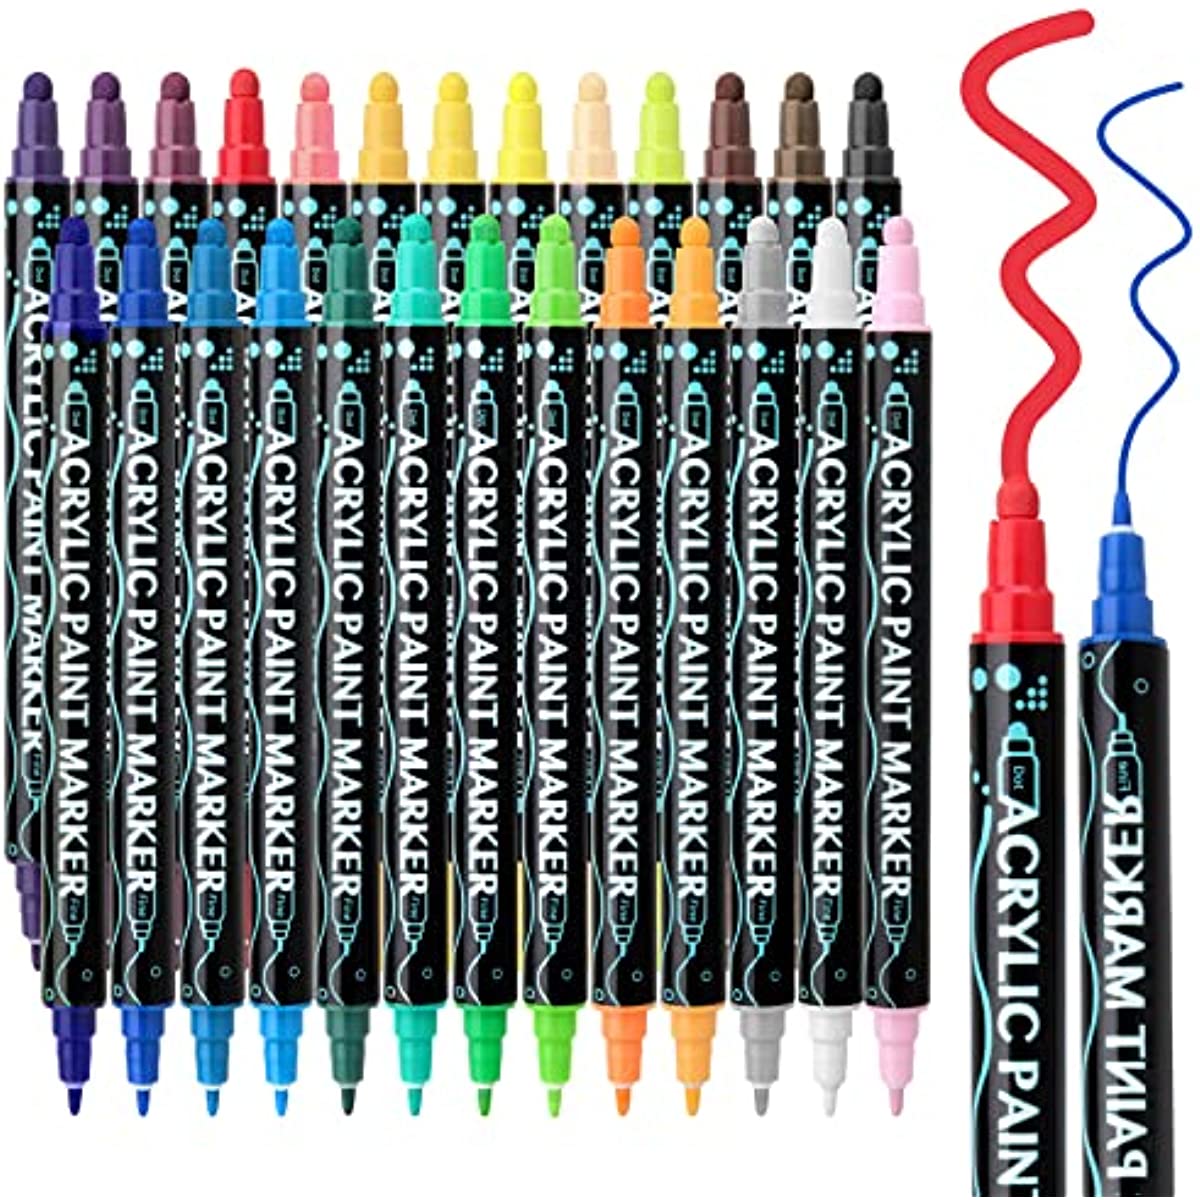 The Best Acrylic Paint Markers  Paint markers, Chalk paint